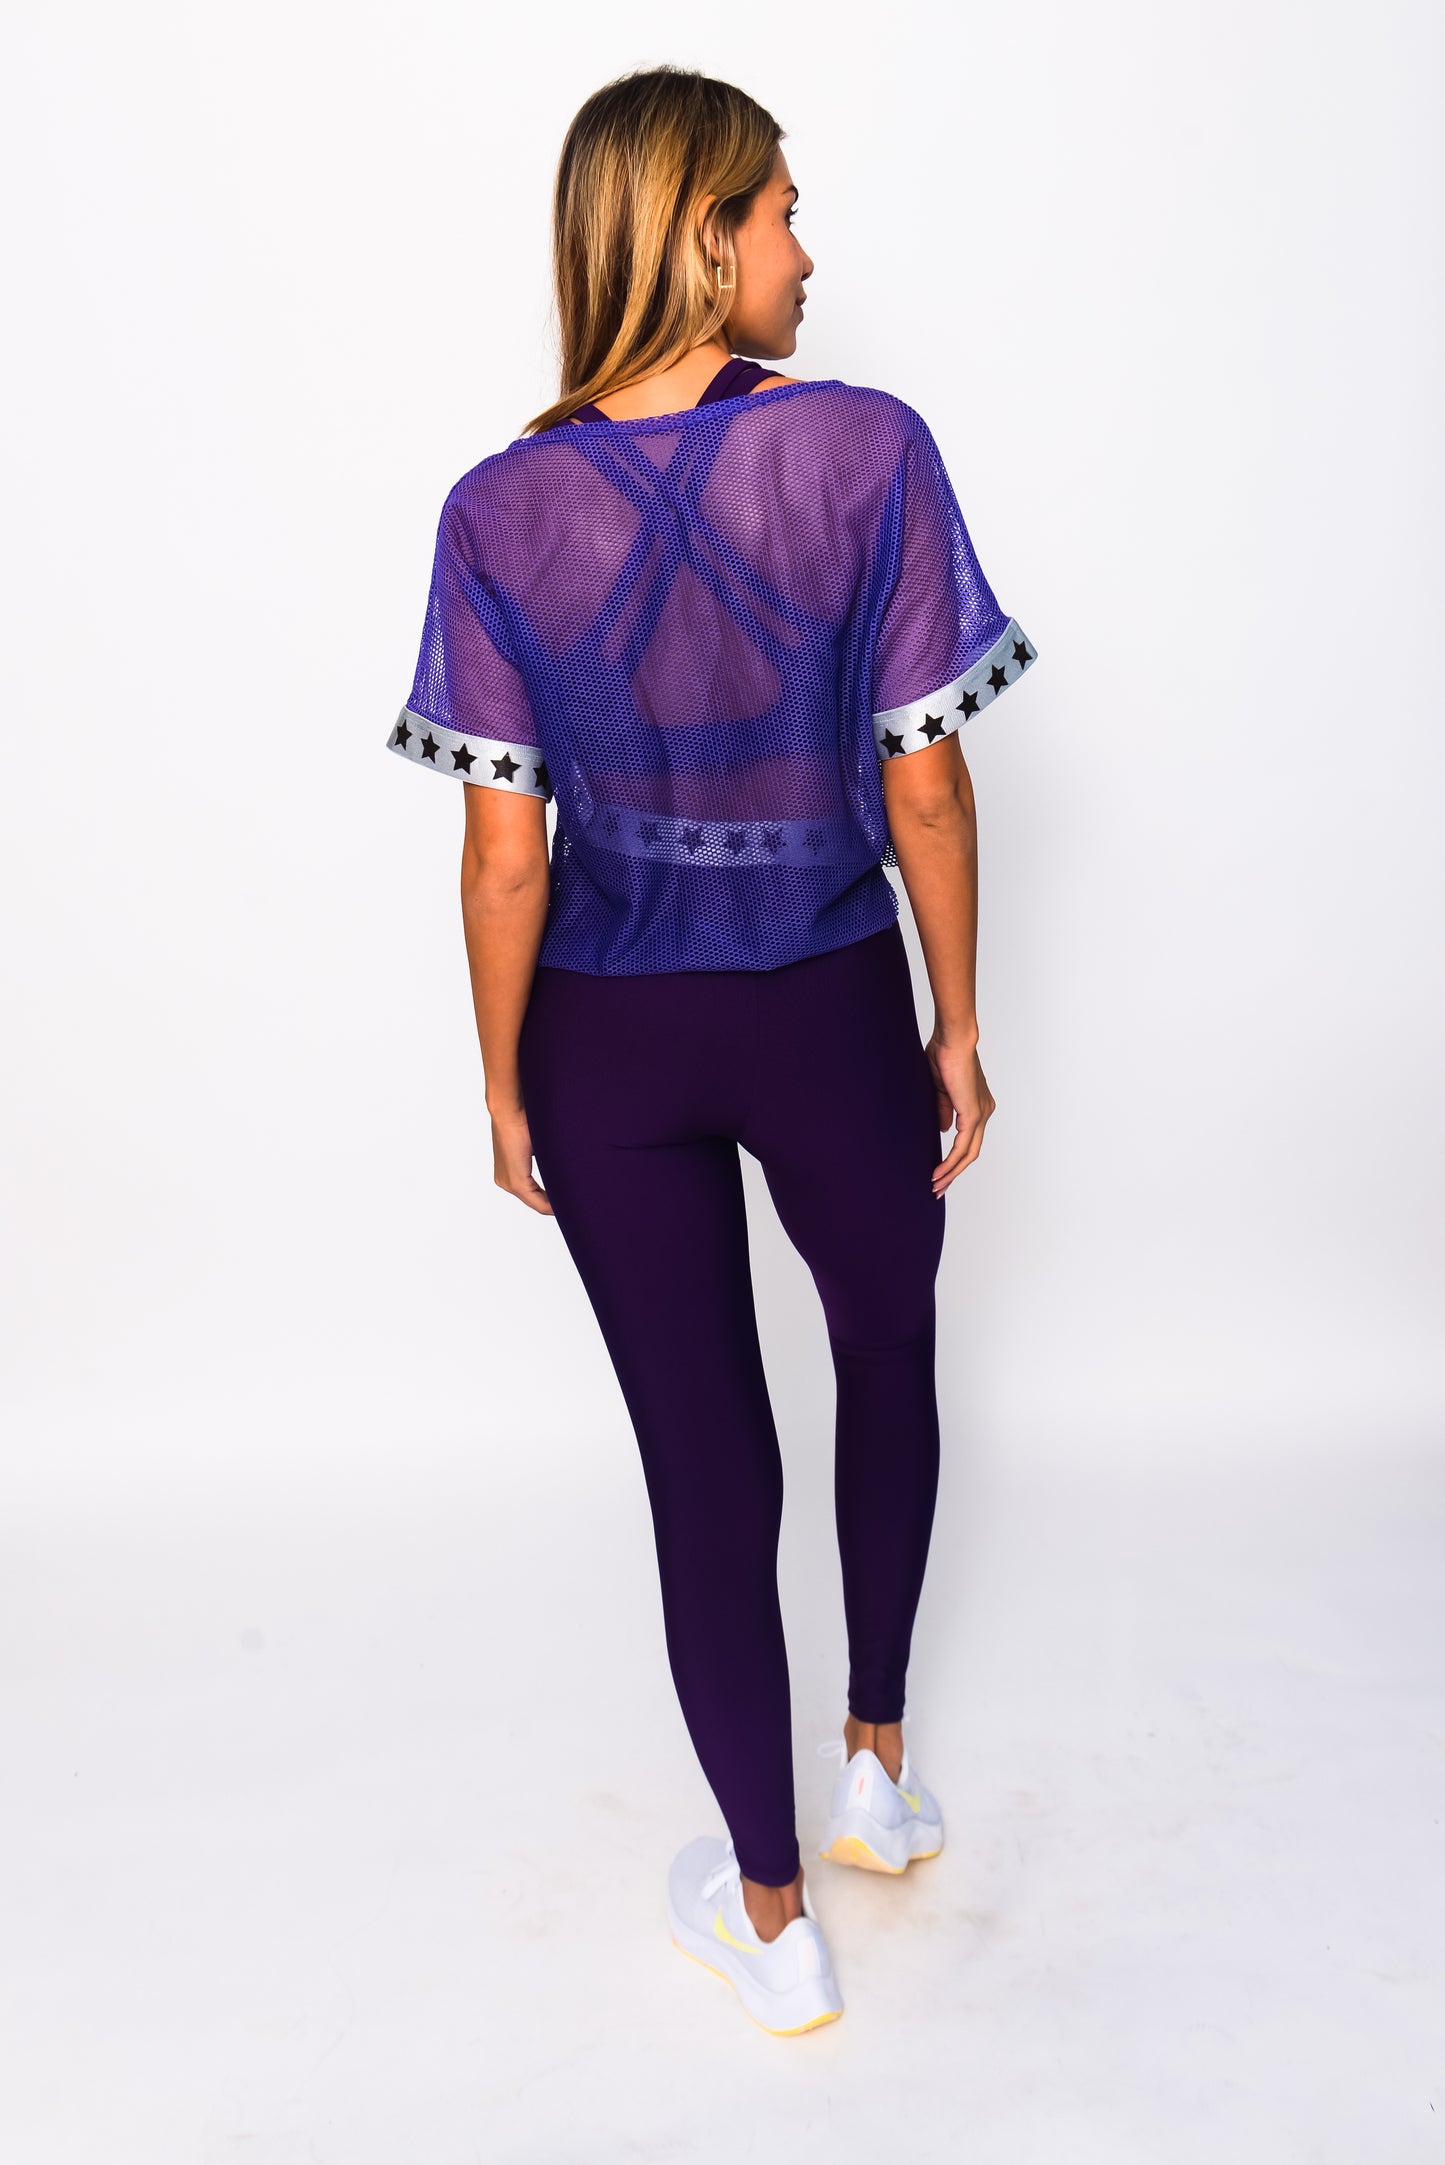 Stars neon purple activewear 3 pieces set